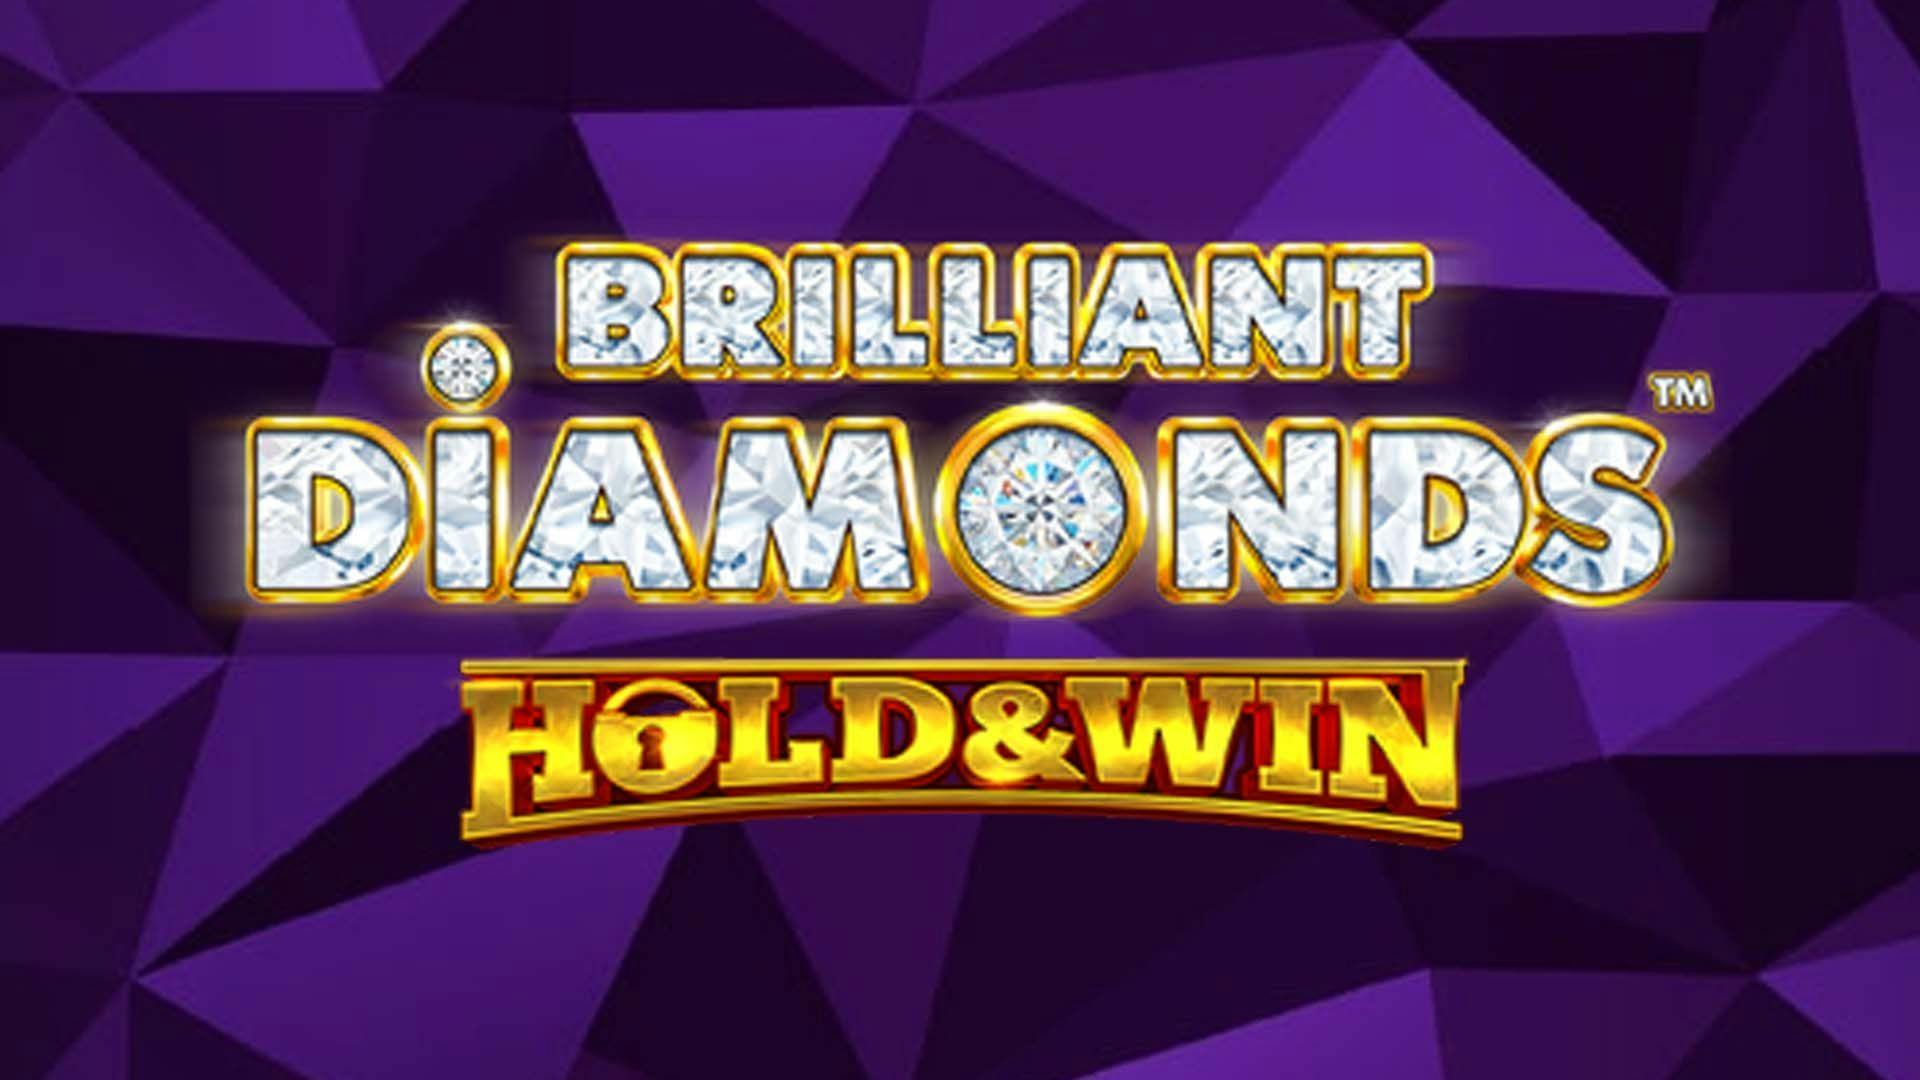 Brilliant Diamonds Hold & Win Slot Machine Online Free Game Play